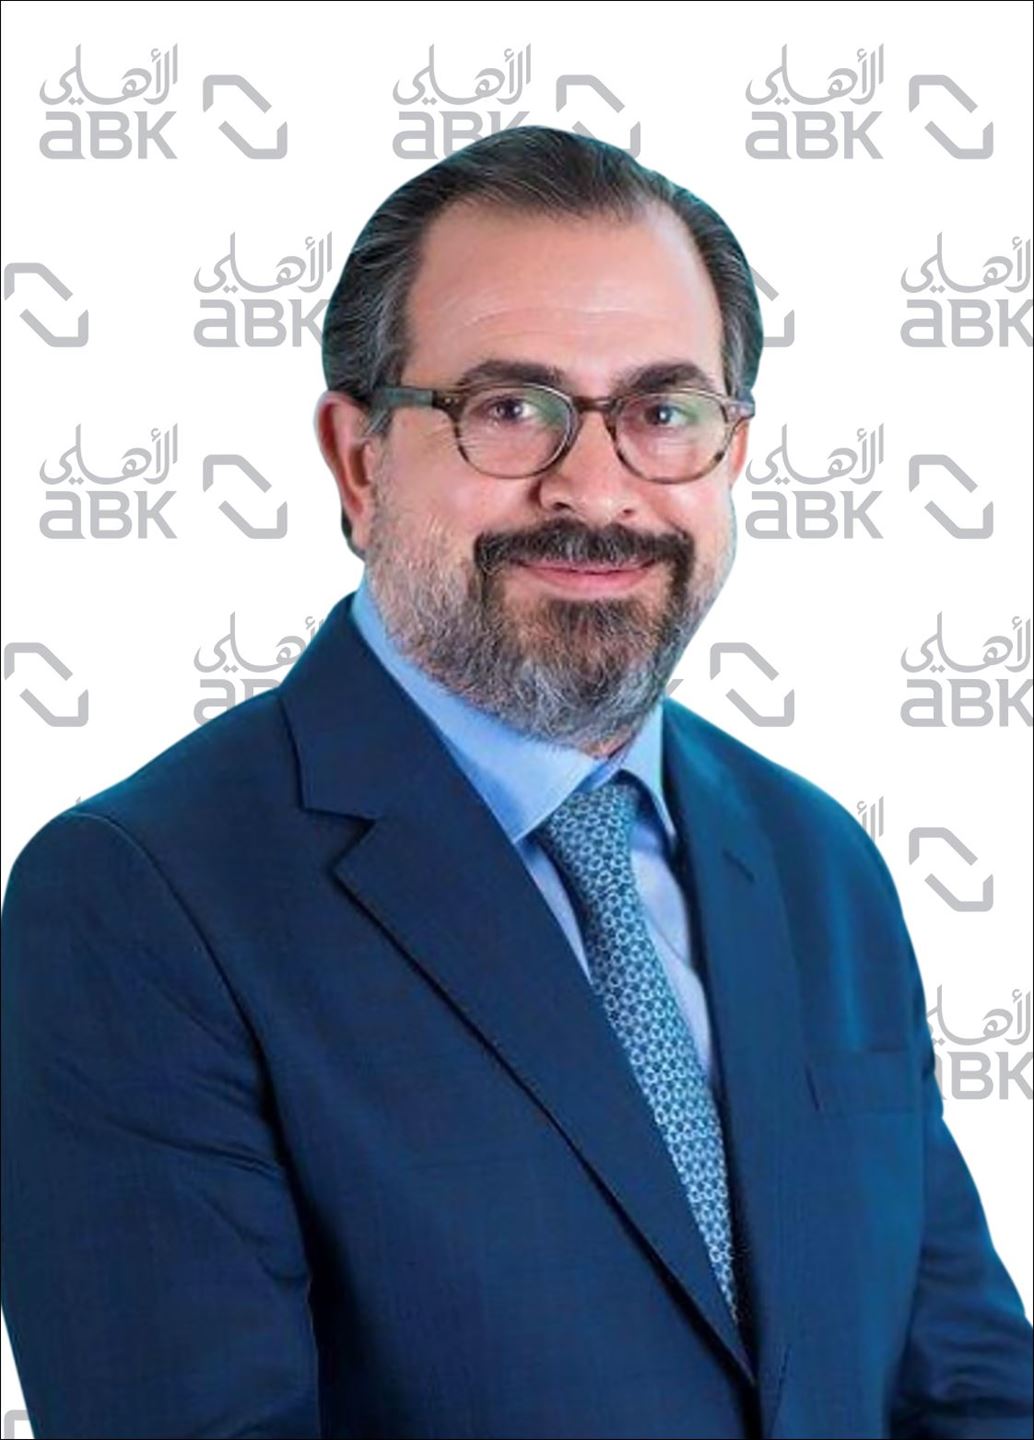 Mr. Rami El Rifai, General Manager & Senior Executive Officer at ABK DIFC